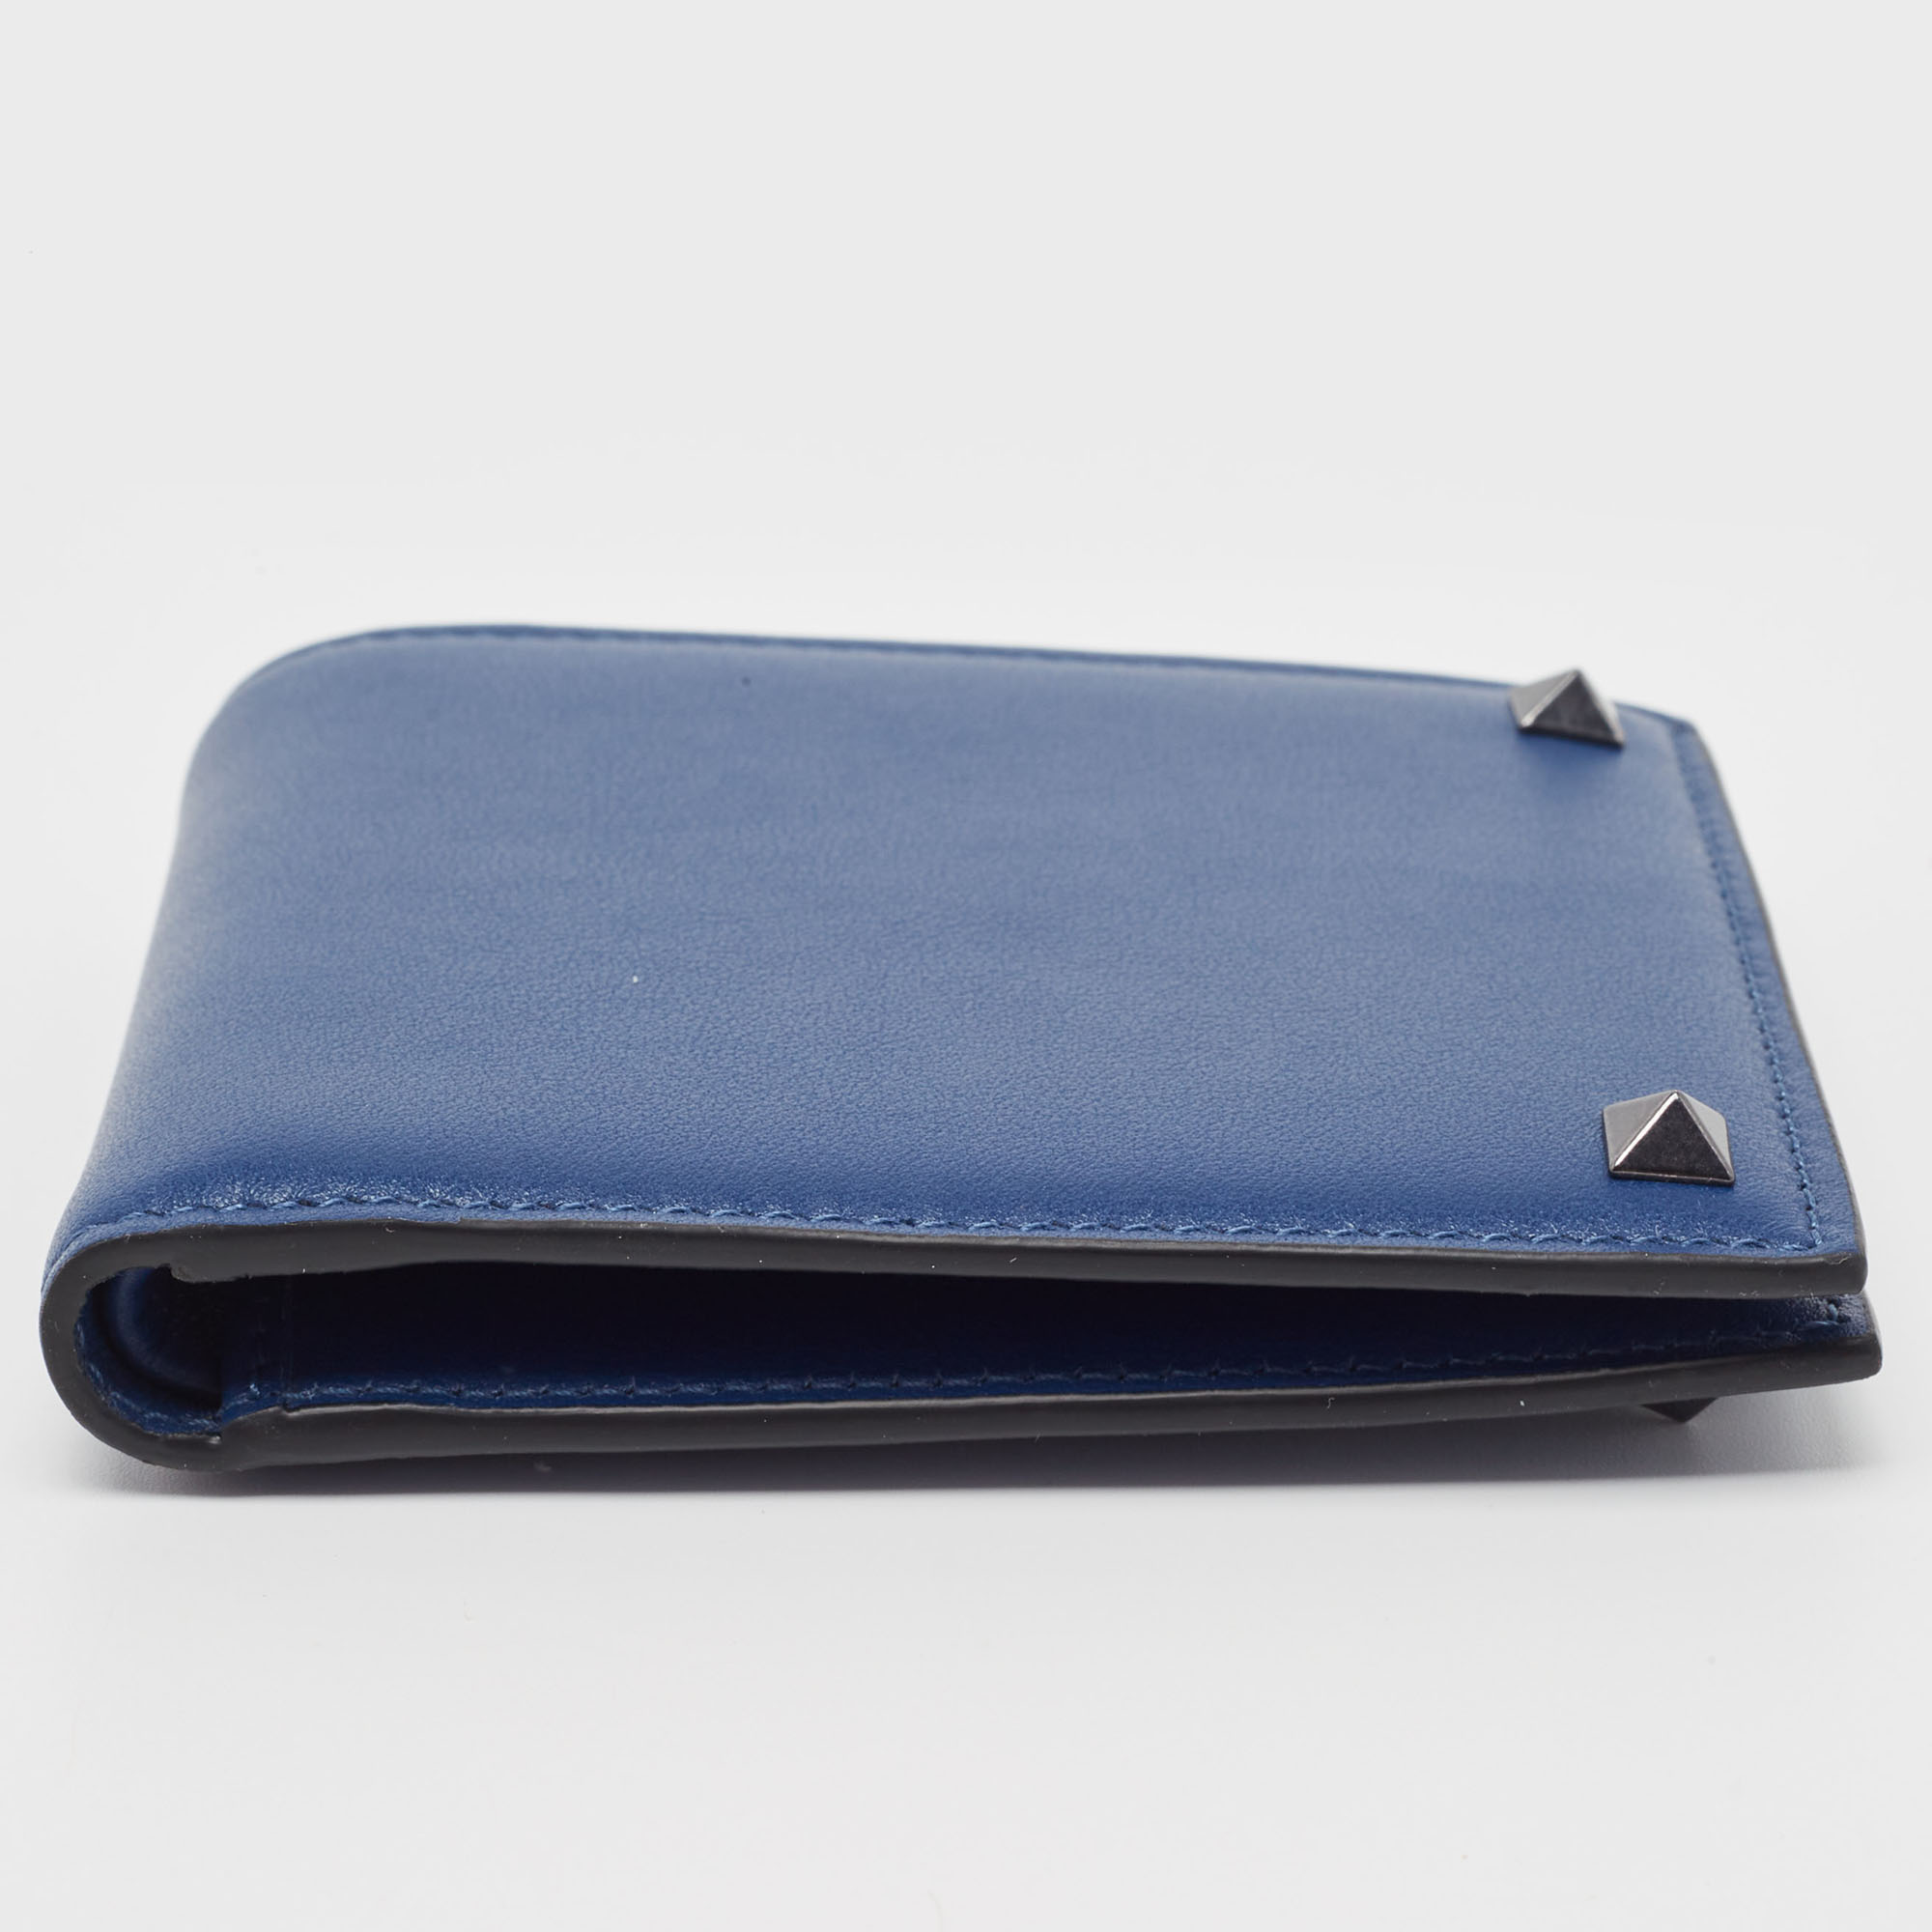 Valentino Blue Leather Rockstud Bifold Wallet